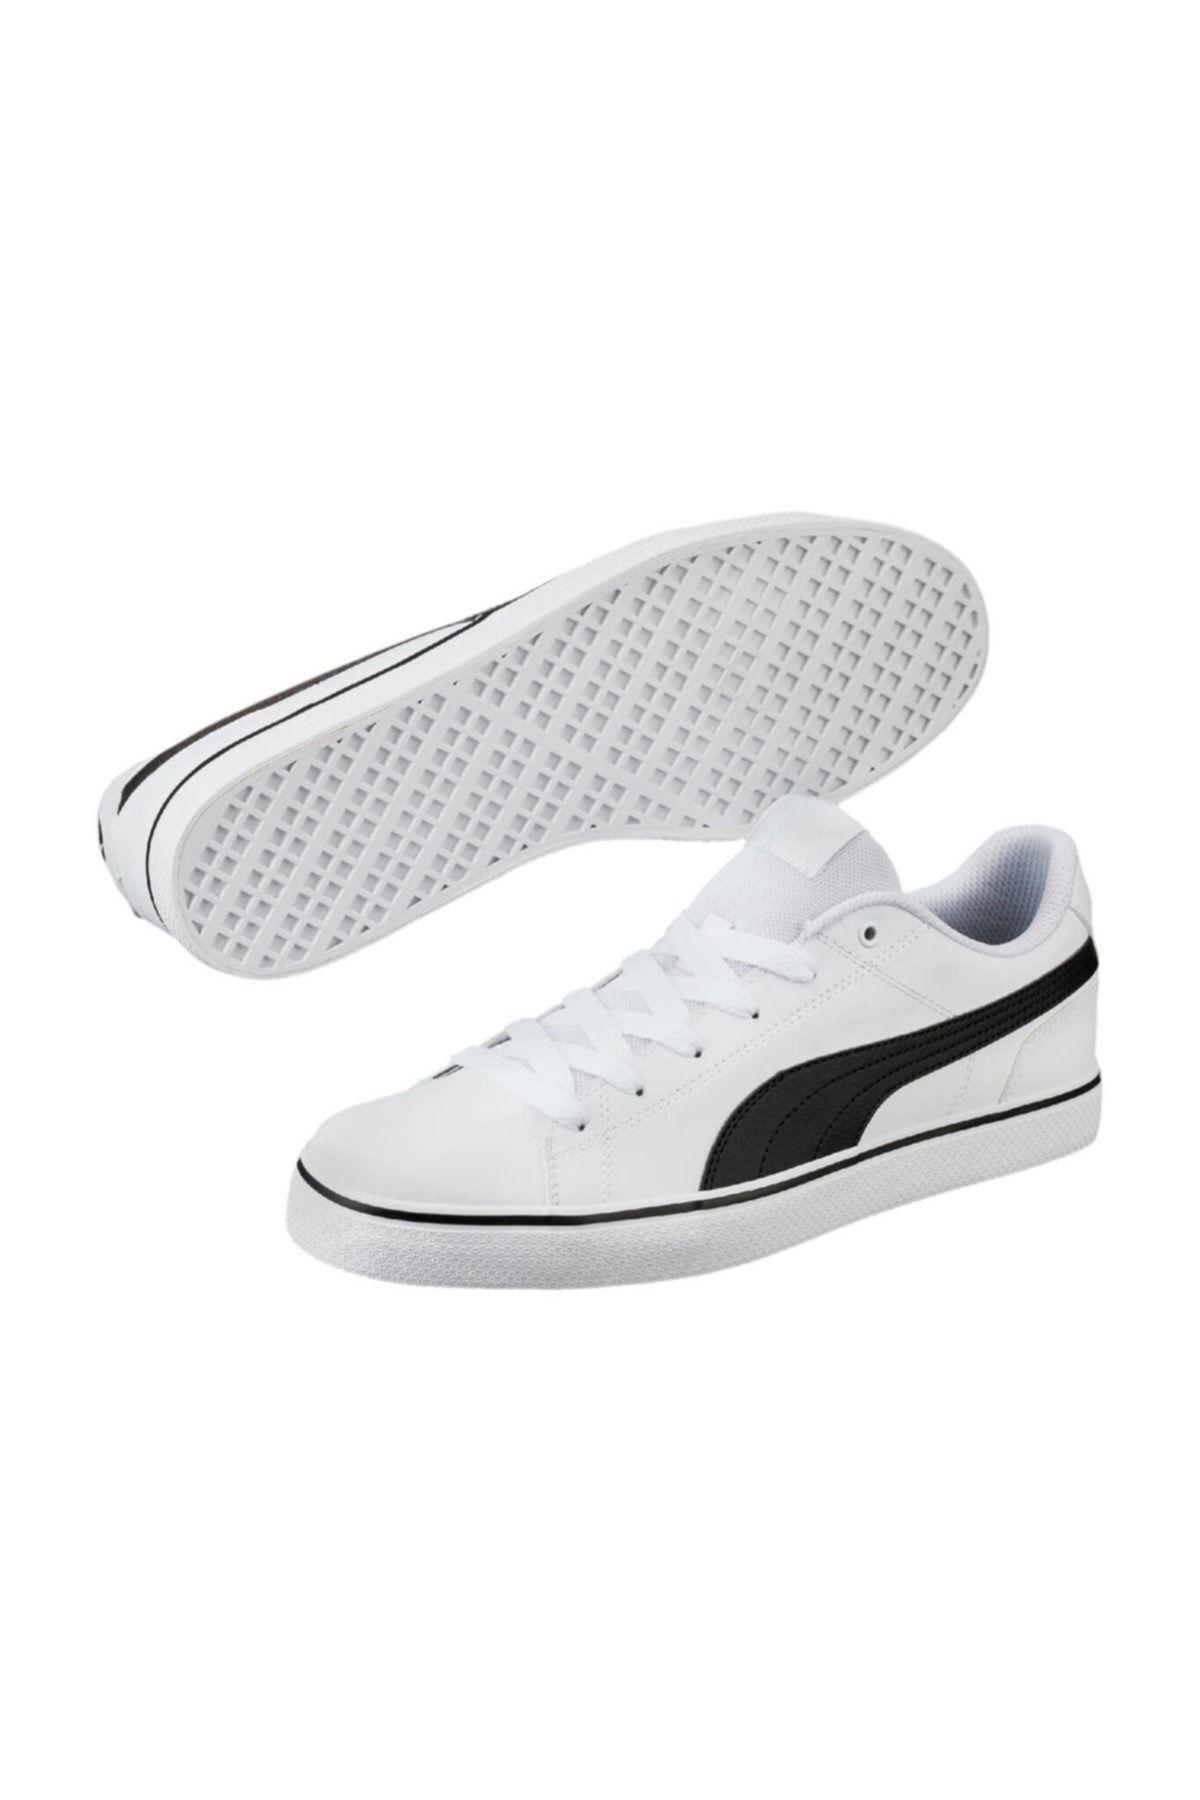 Puma COURT POINT VULC V2 Beyaz Erkek Sneaker Ayakkabı 100257219